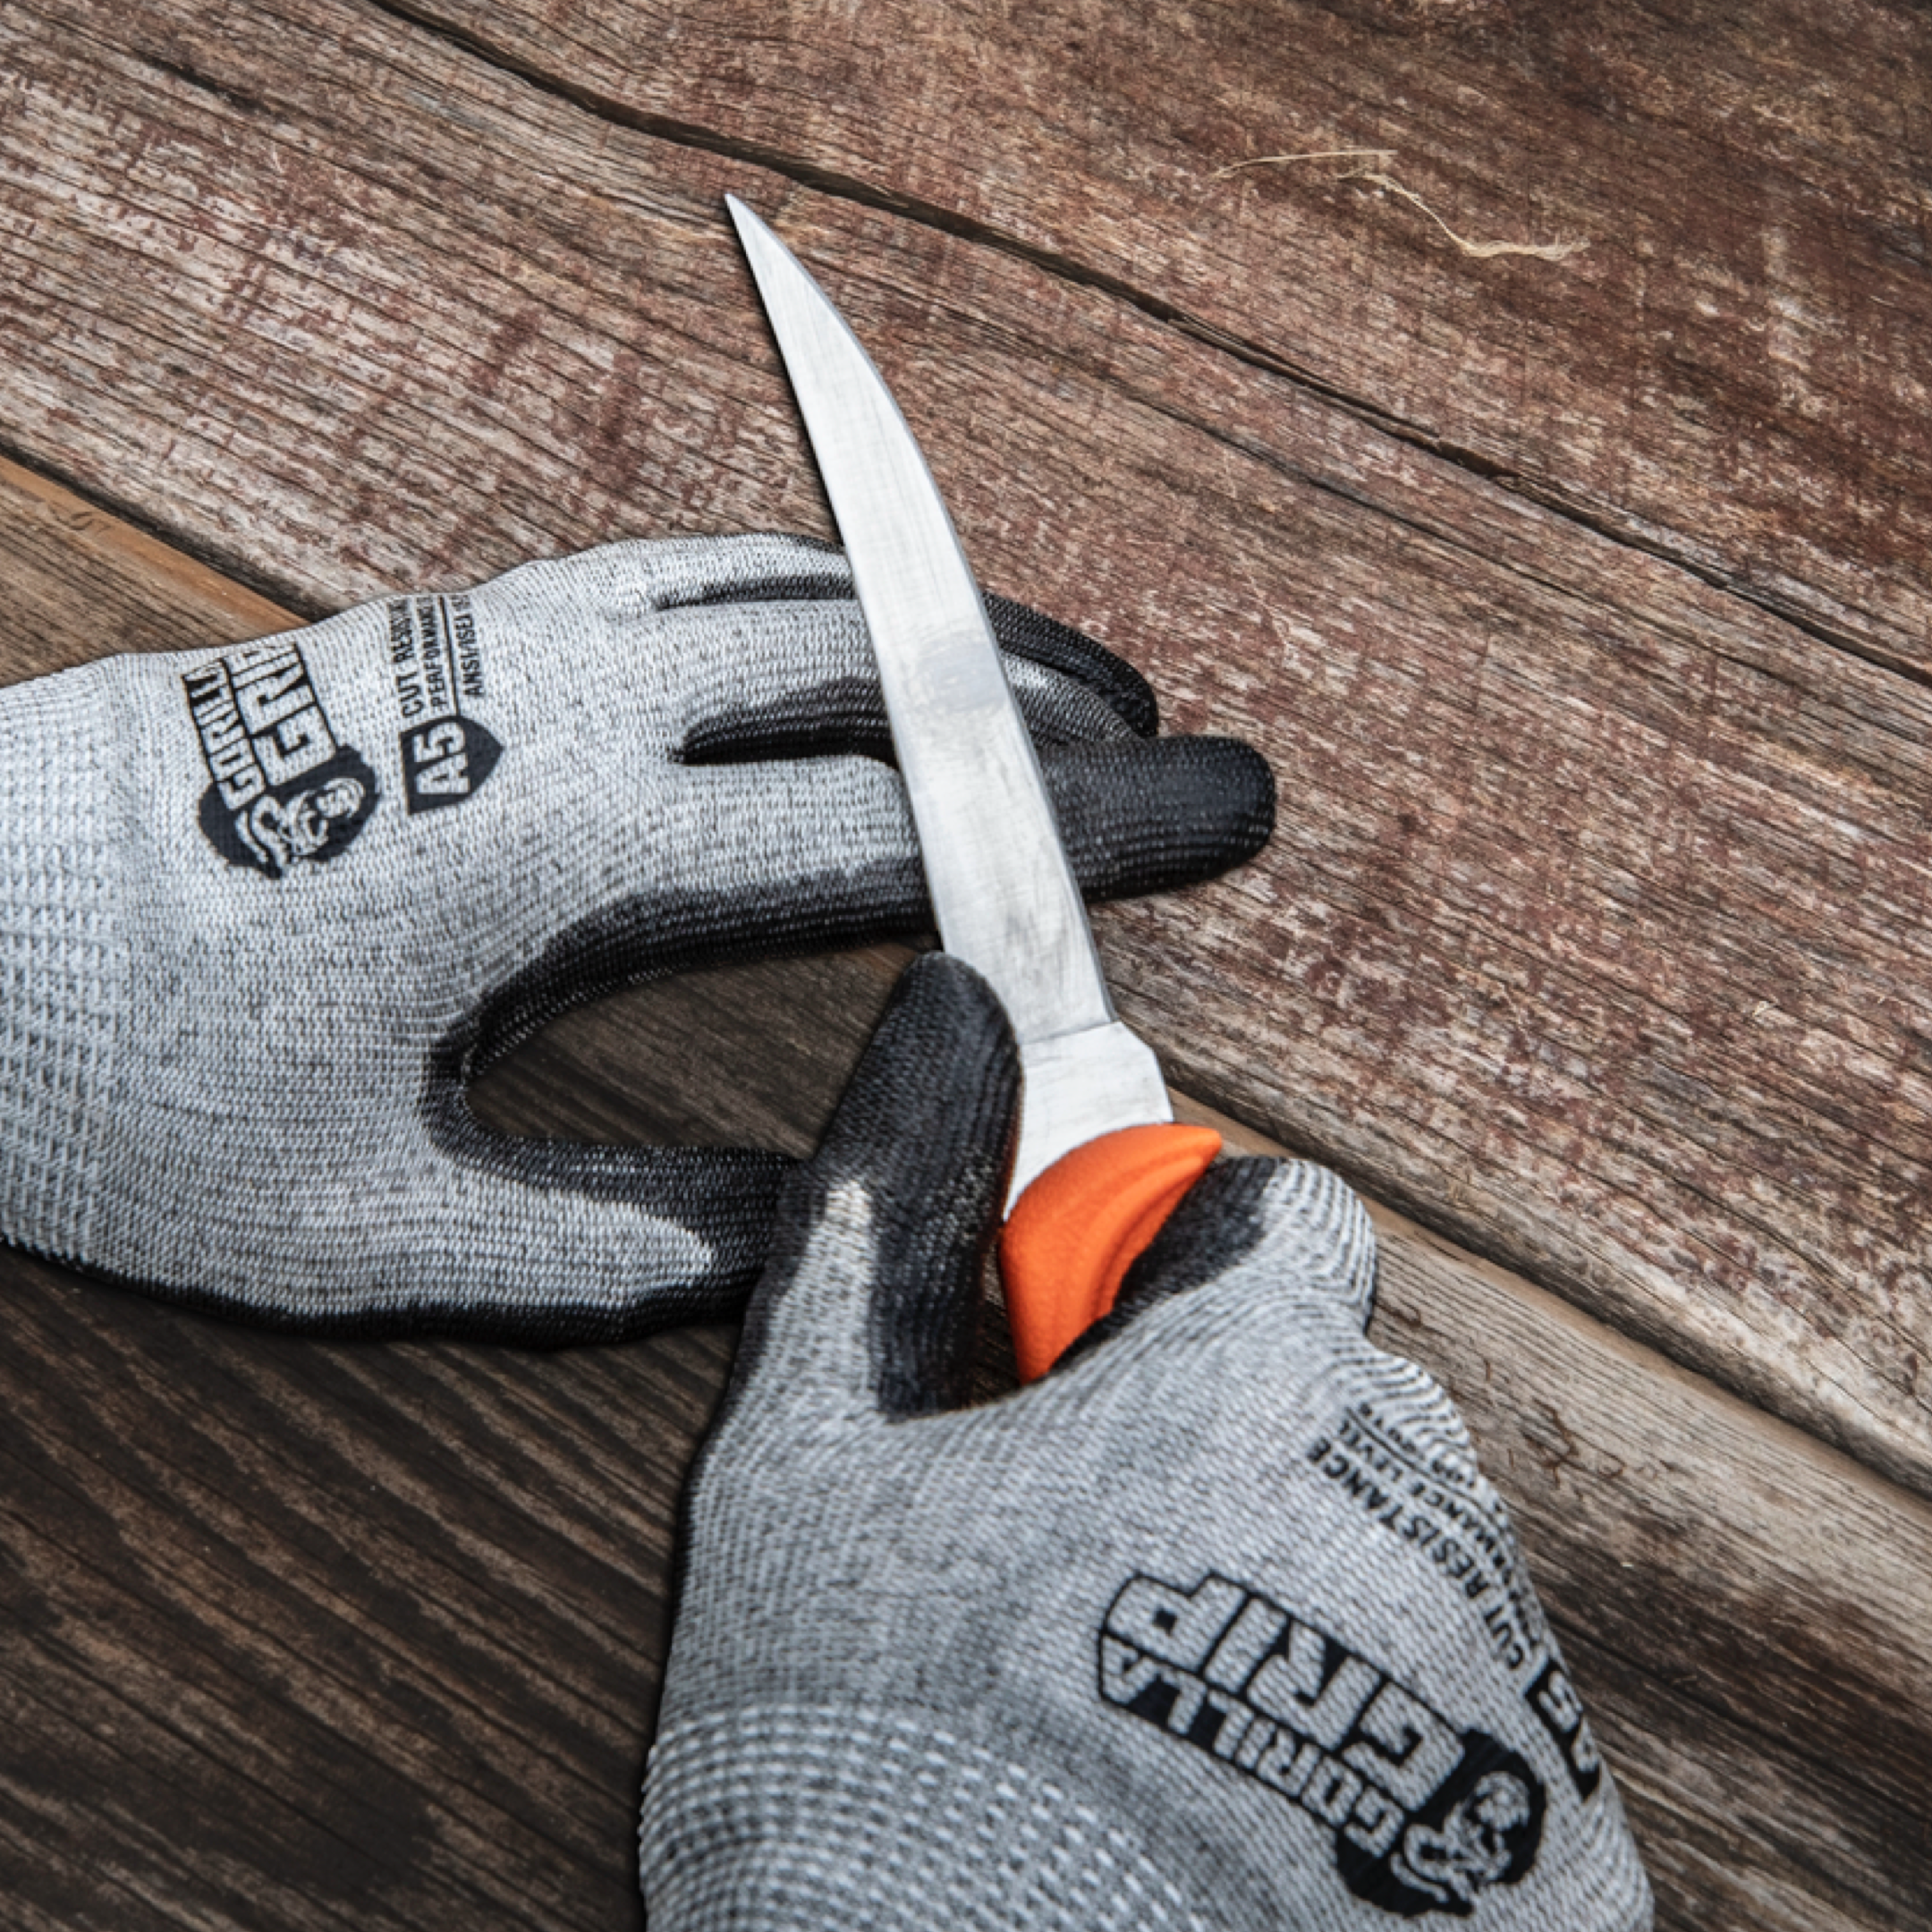 Empiral E142573420 Gorilla Cut 5 PU PK Resistant Gloves Medium